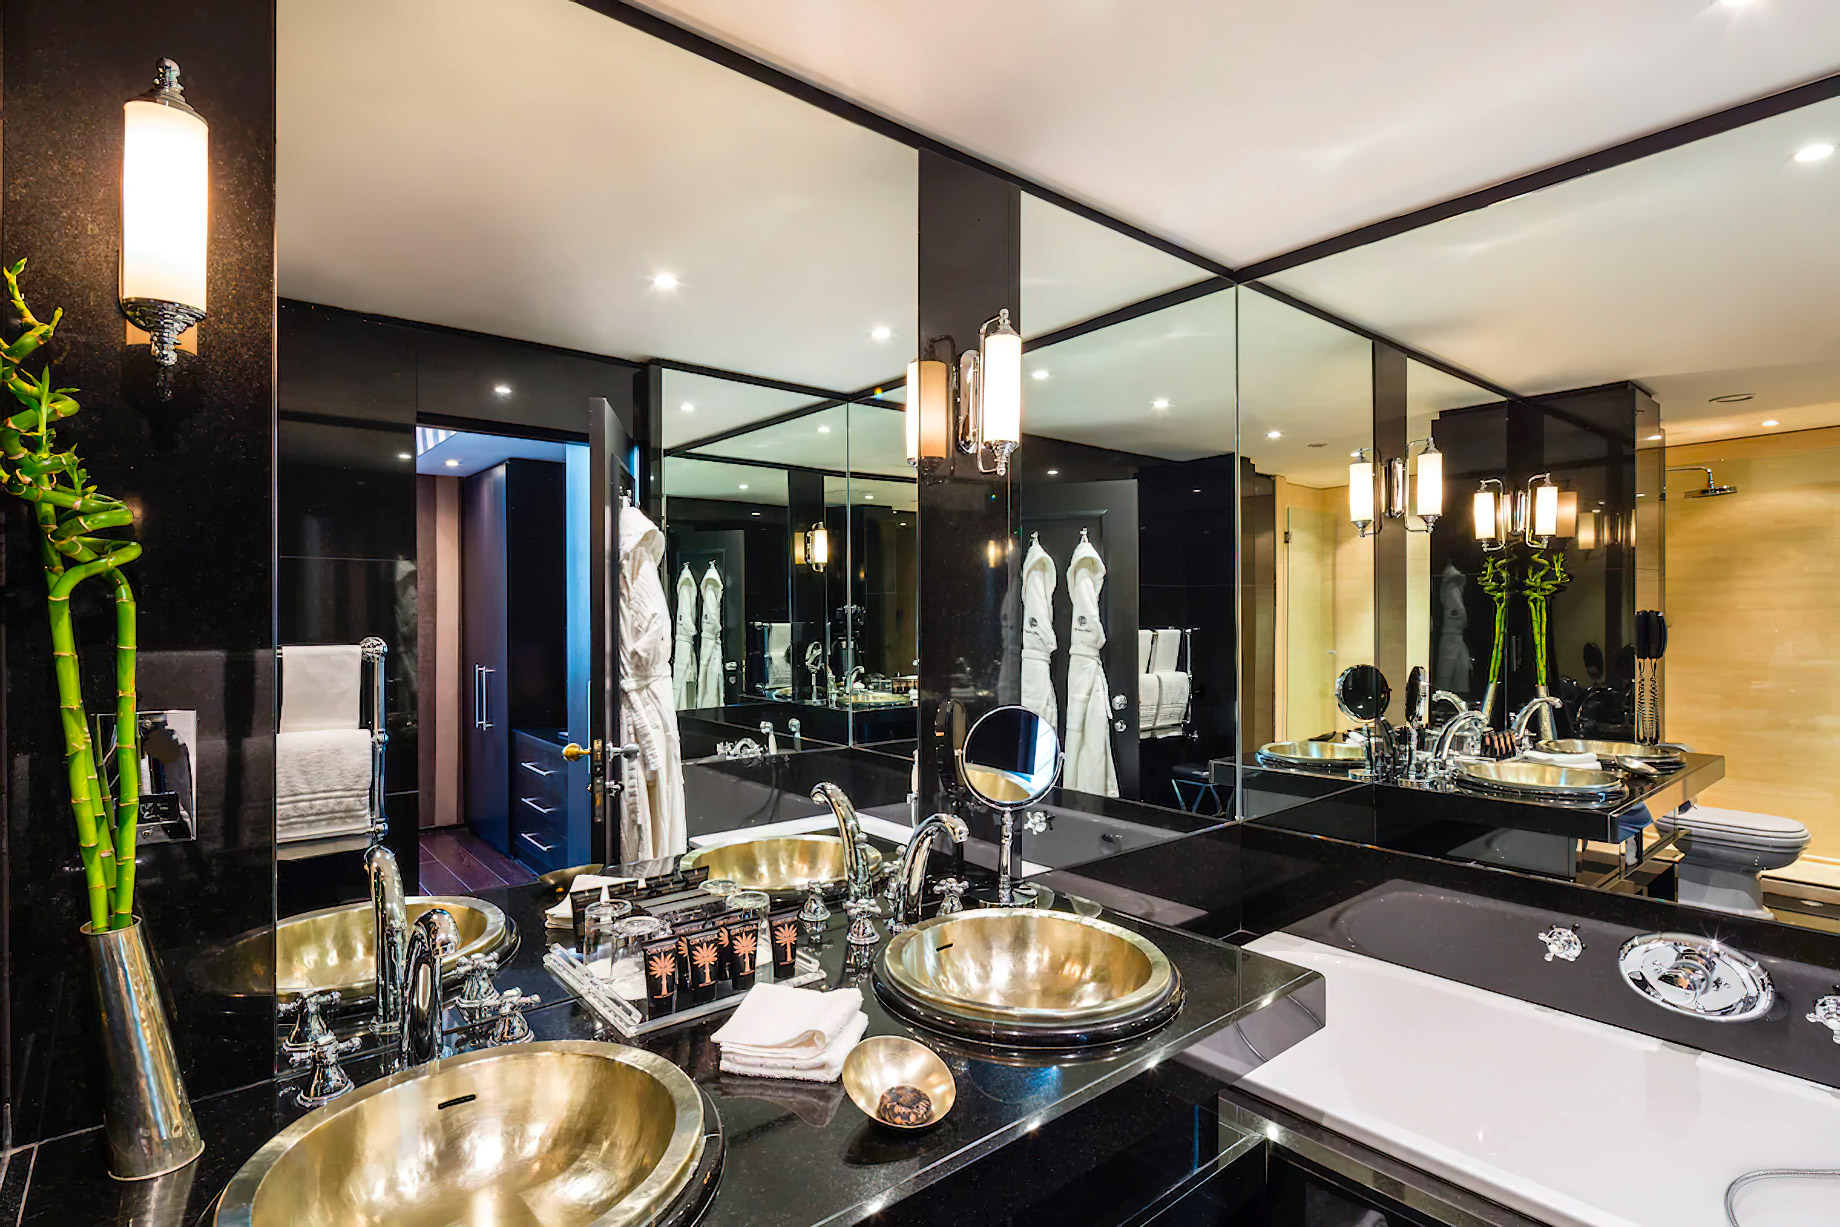 Baglioni Hotel London – South Kensington, London, United Kingdom – Presidential Suite Bathroom